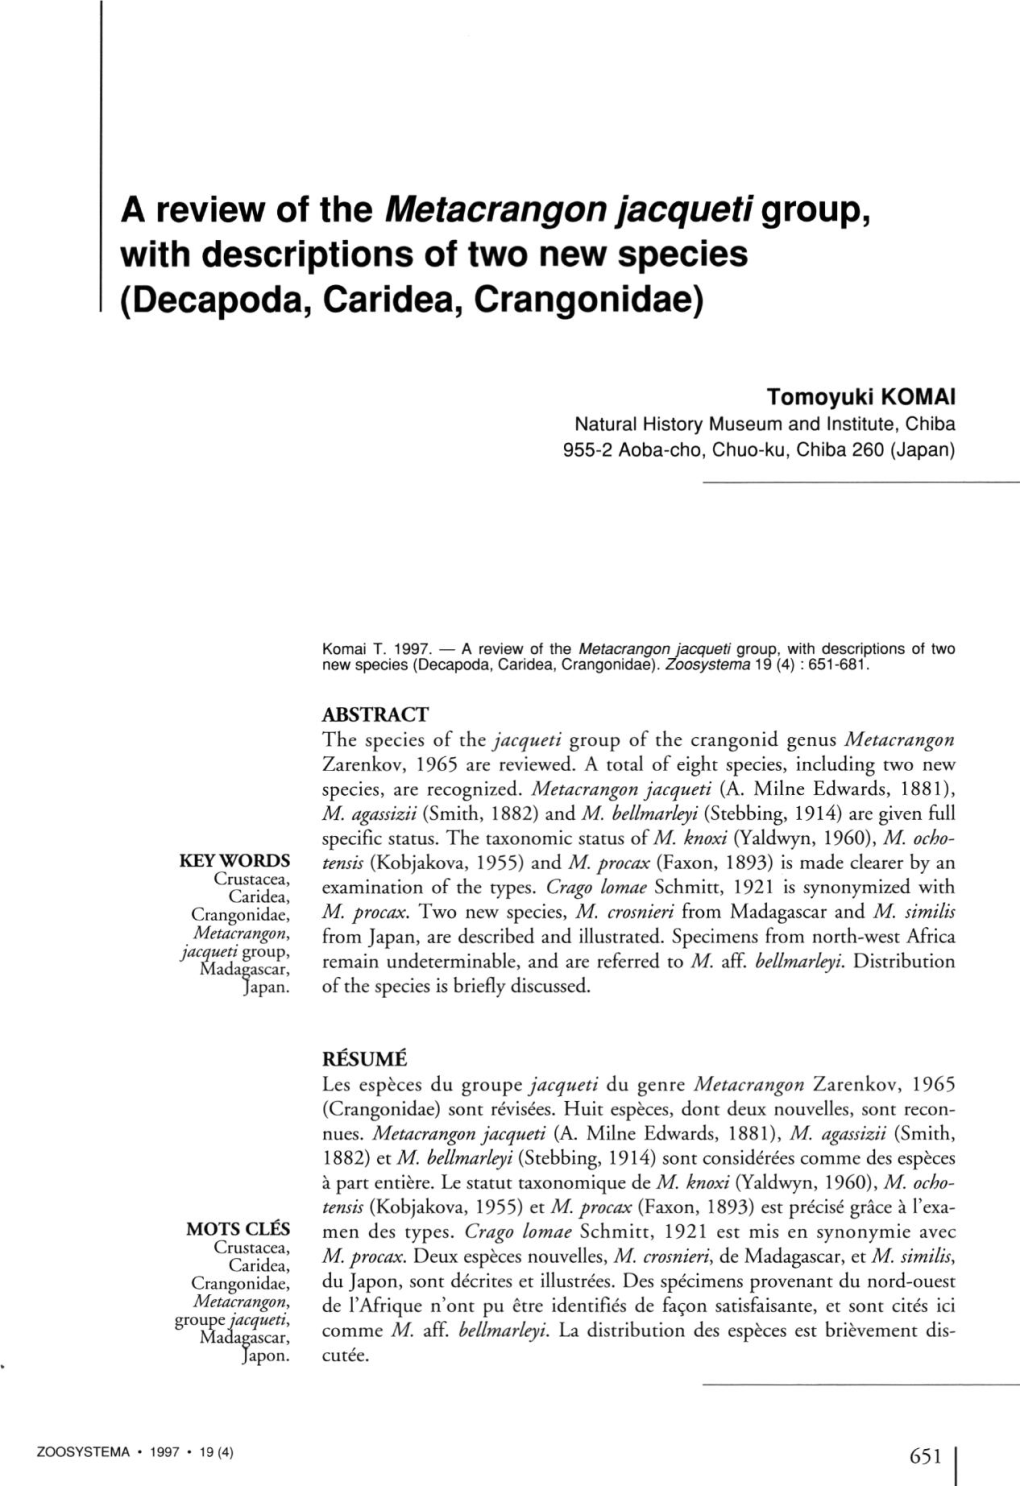 A Review of the Metacrangon Jacqueti Group, with Descriptions of Two New Species (Decapoda, Caridea, Crangonidae)